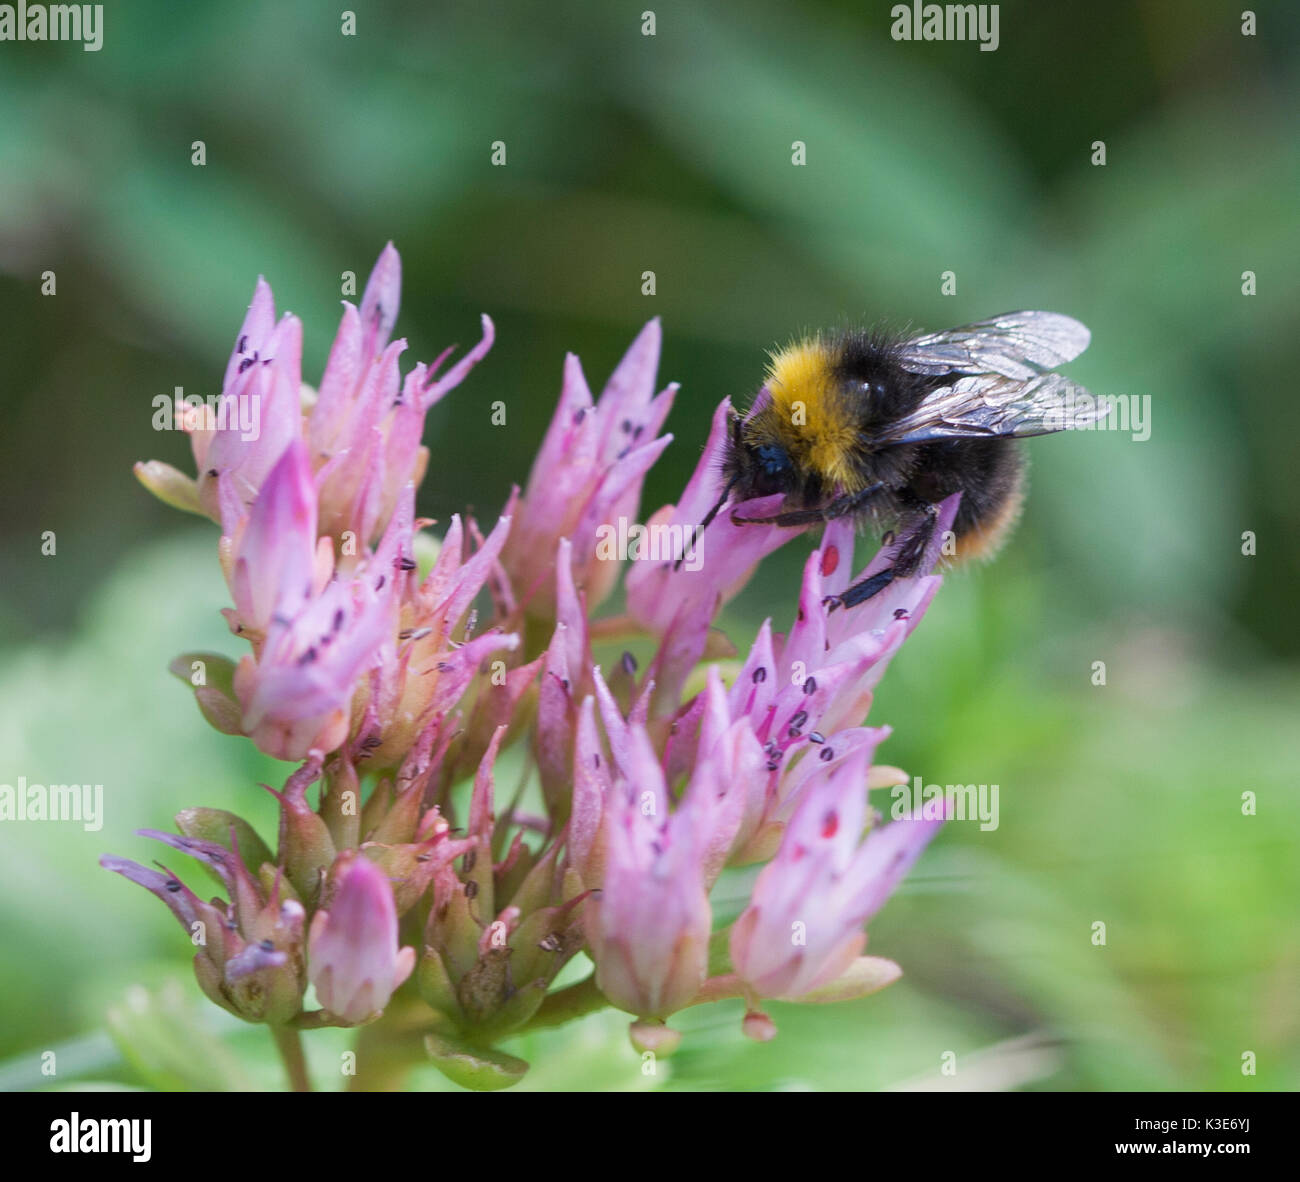 Bumblebee on flower in garden Stock Photo